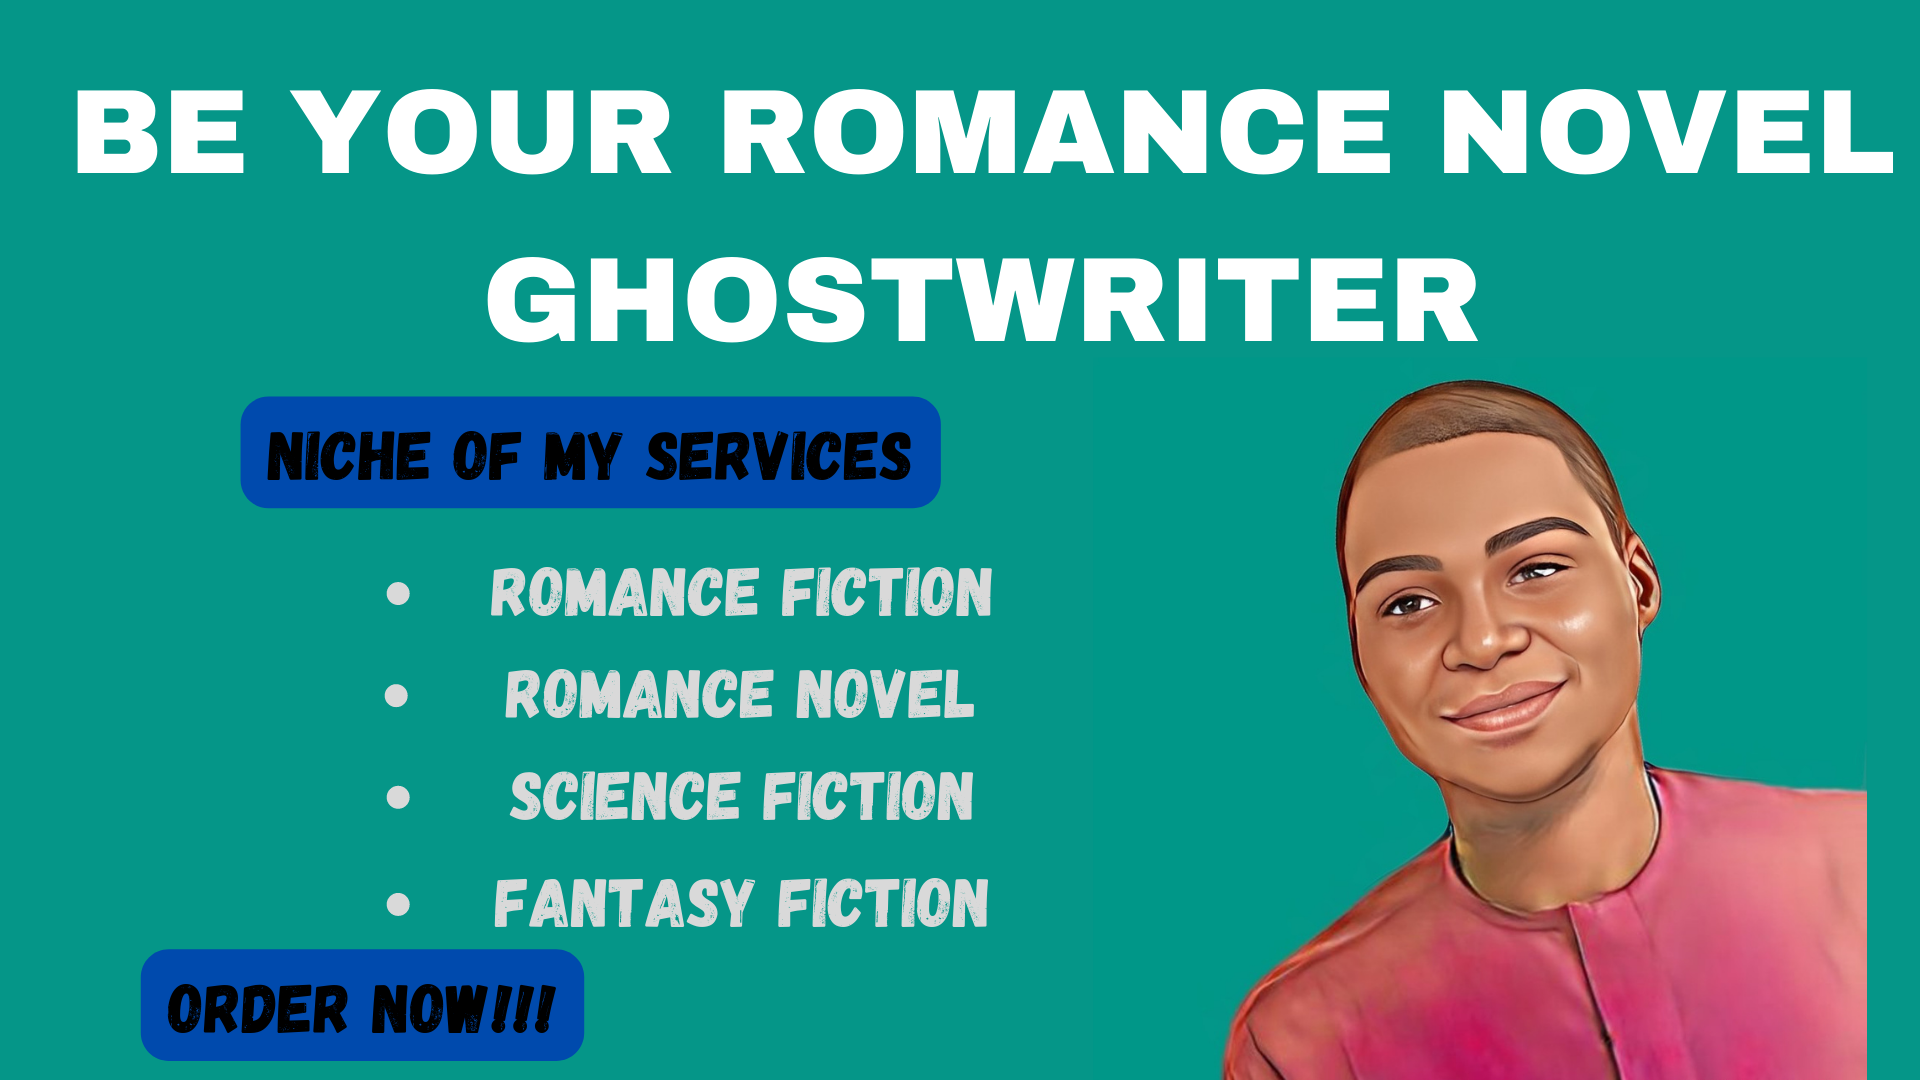 I will ghostwrite your romance novel